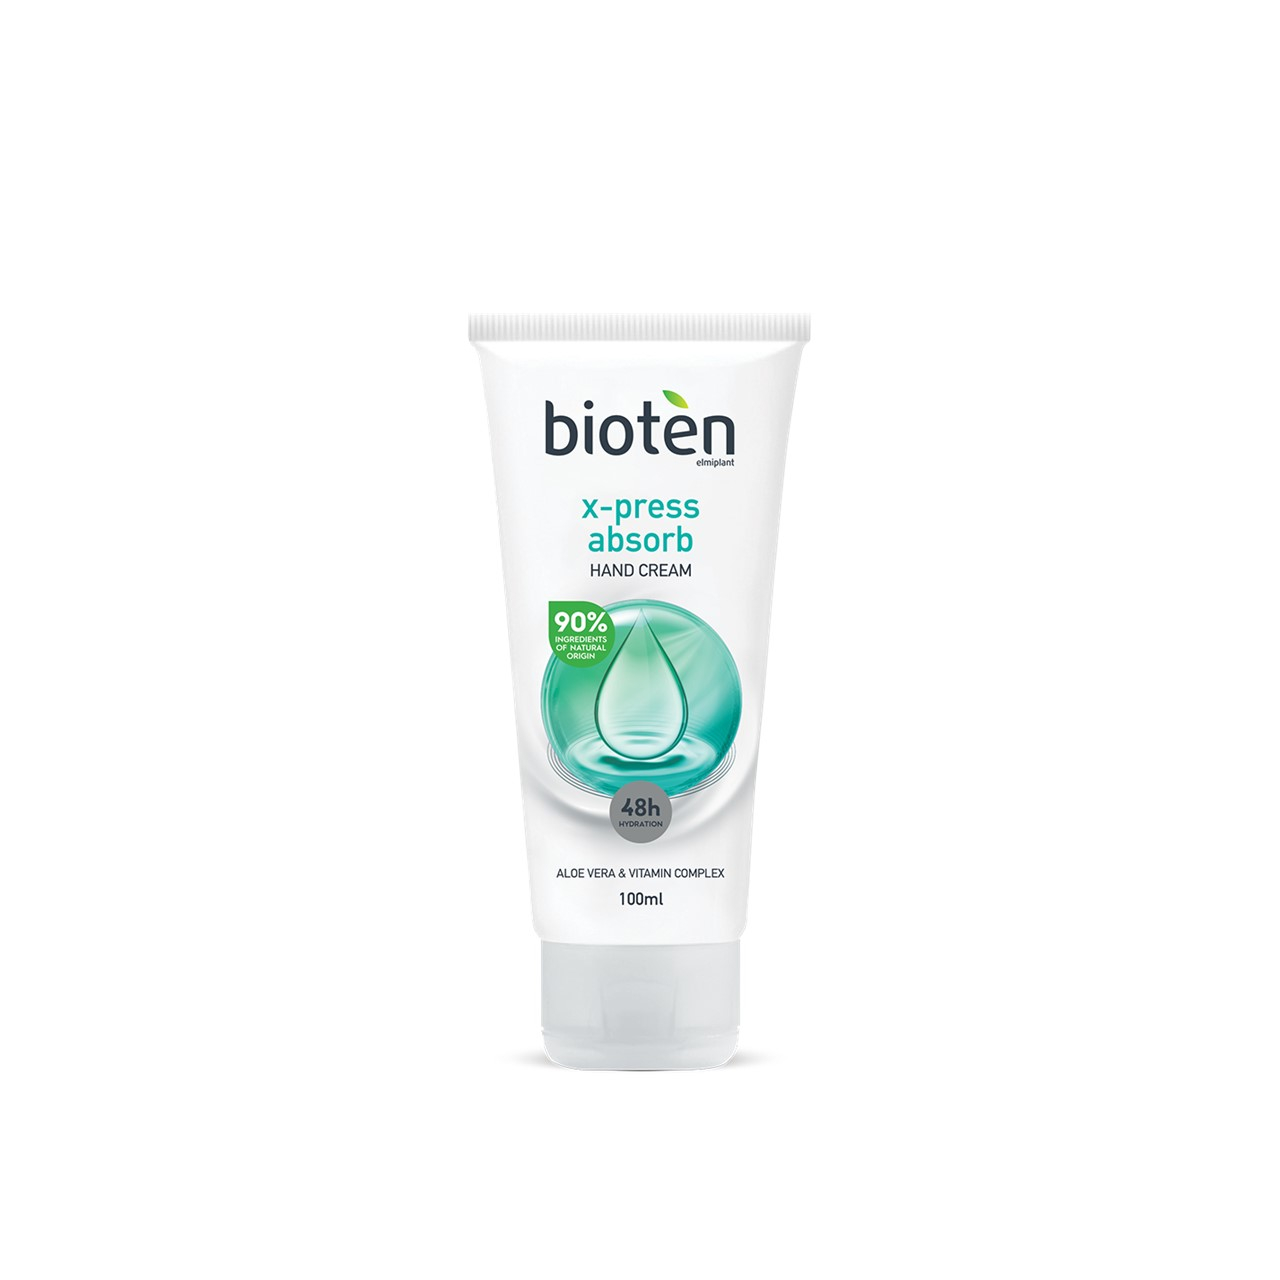 bioten Xpress Absorb Hand Cream 100ml